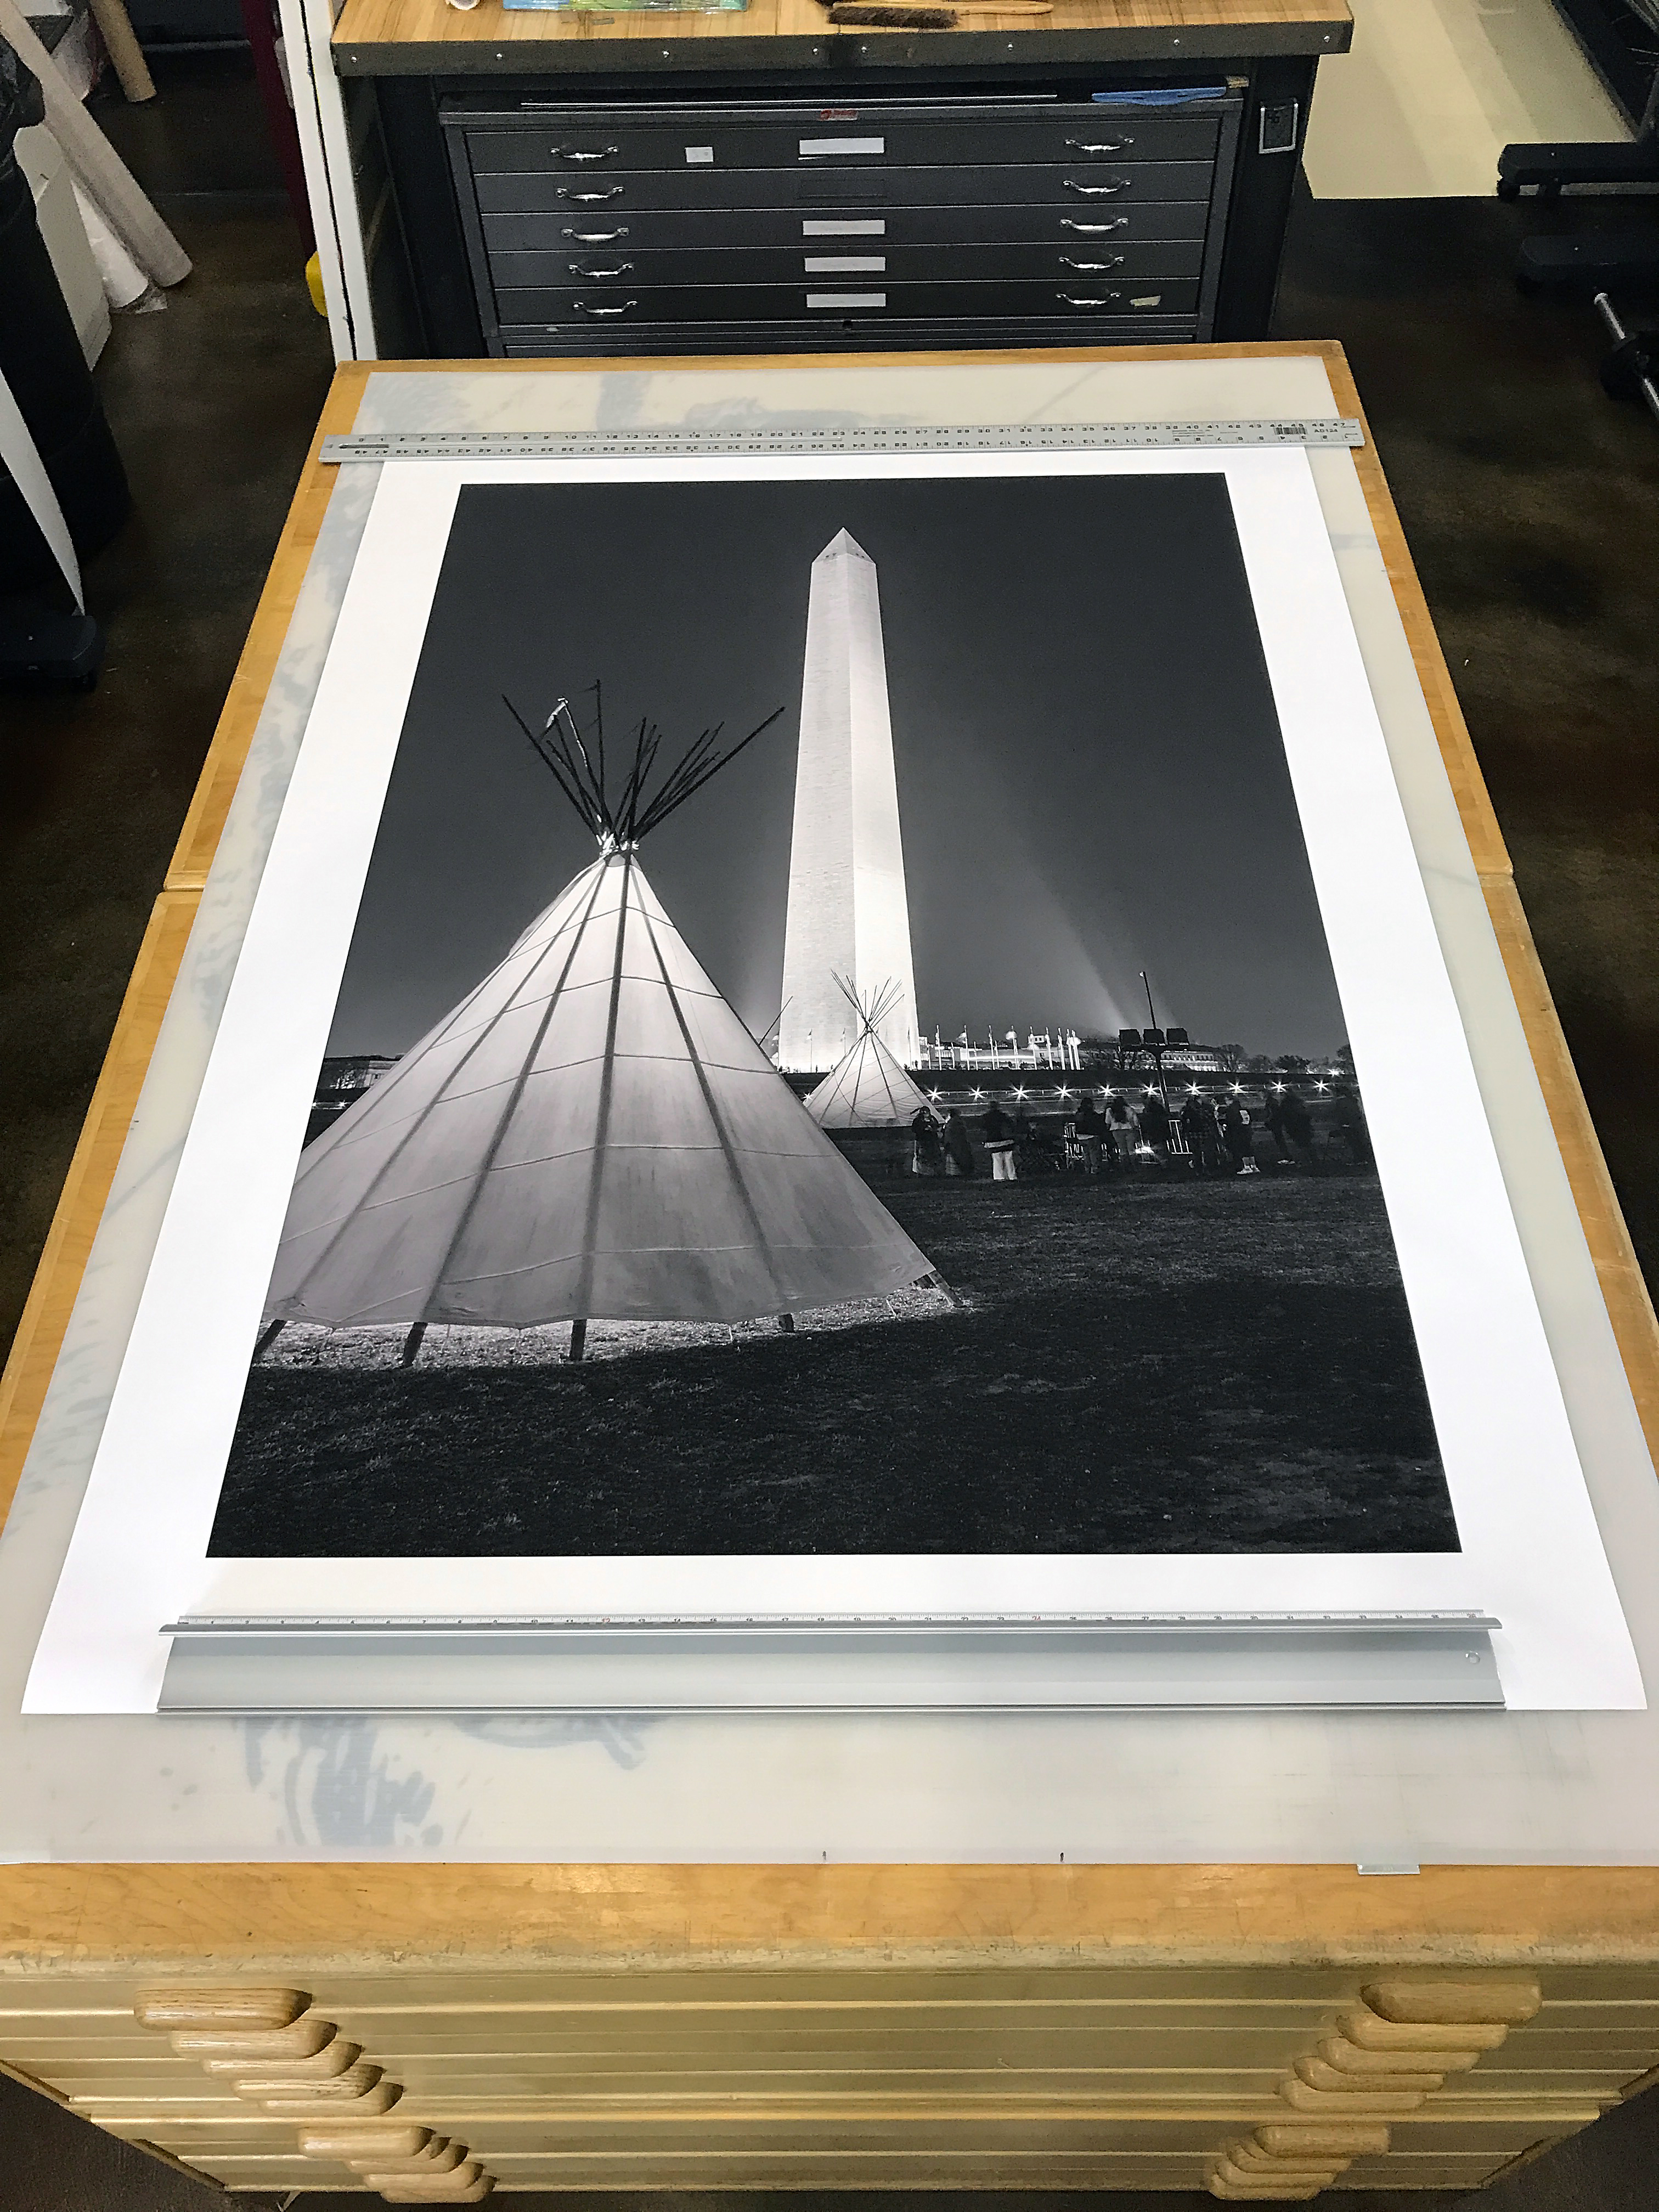 Print featuring the Washington Monument in Washington DC